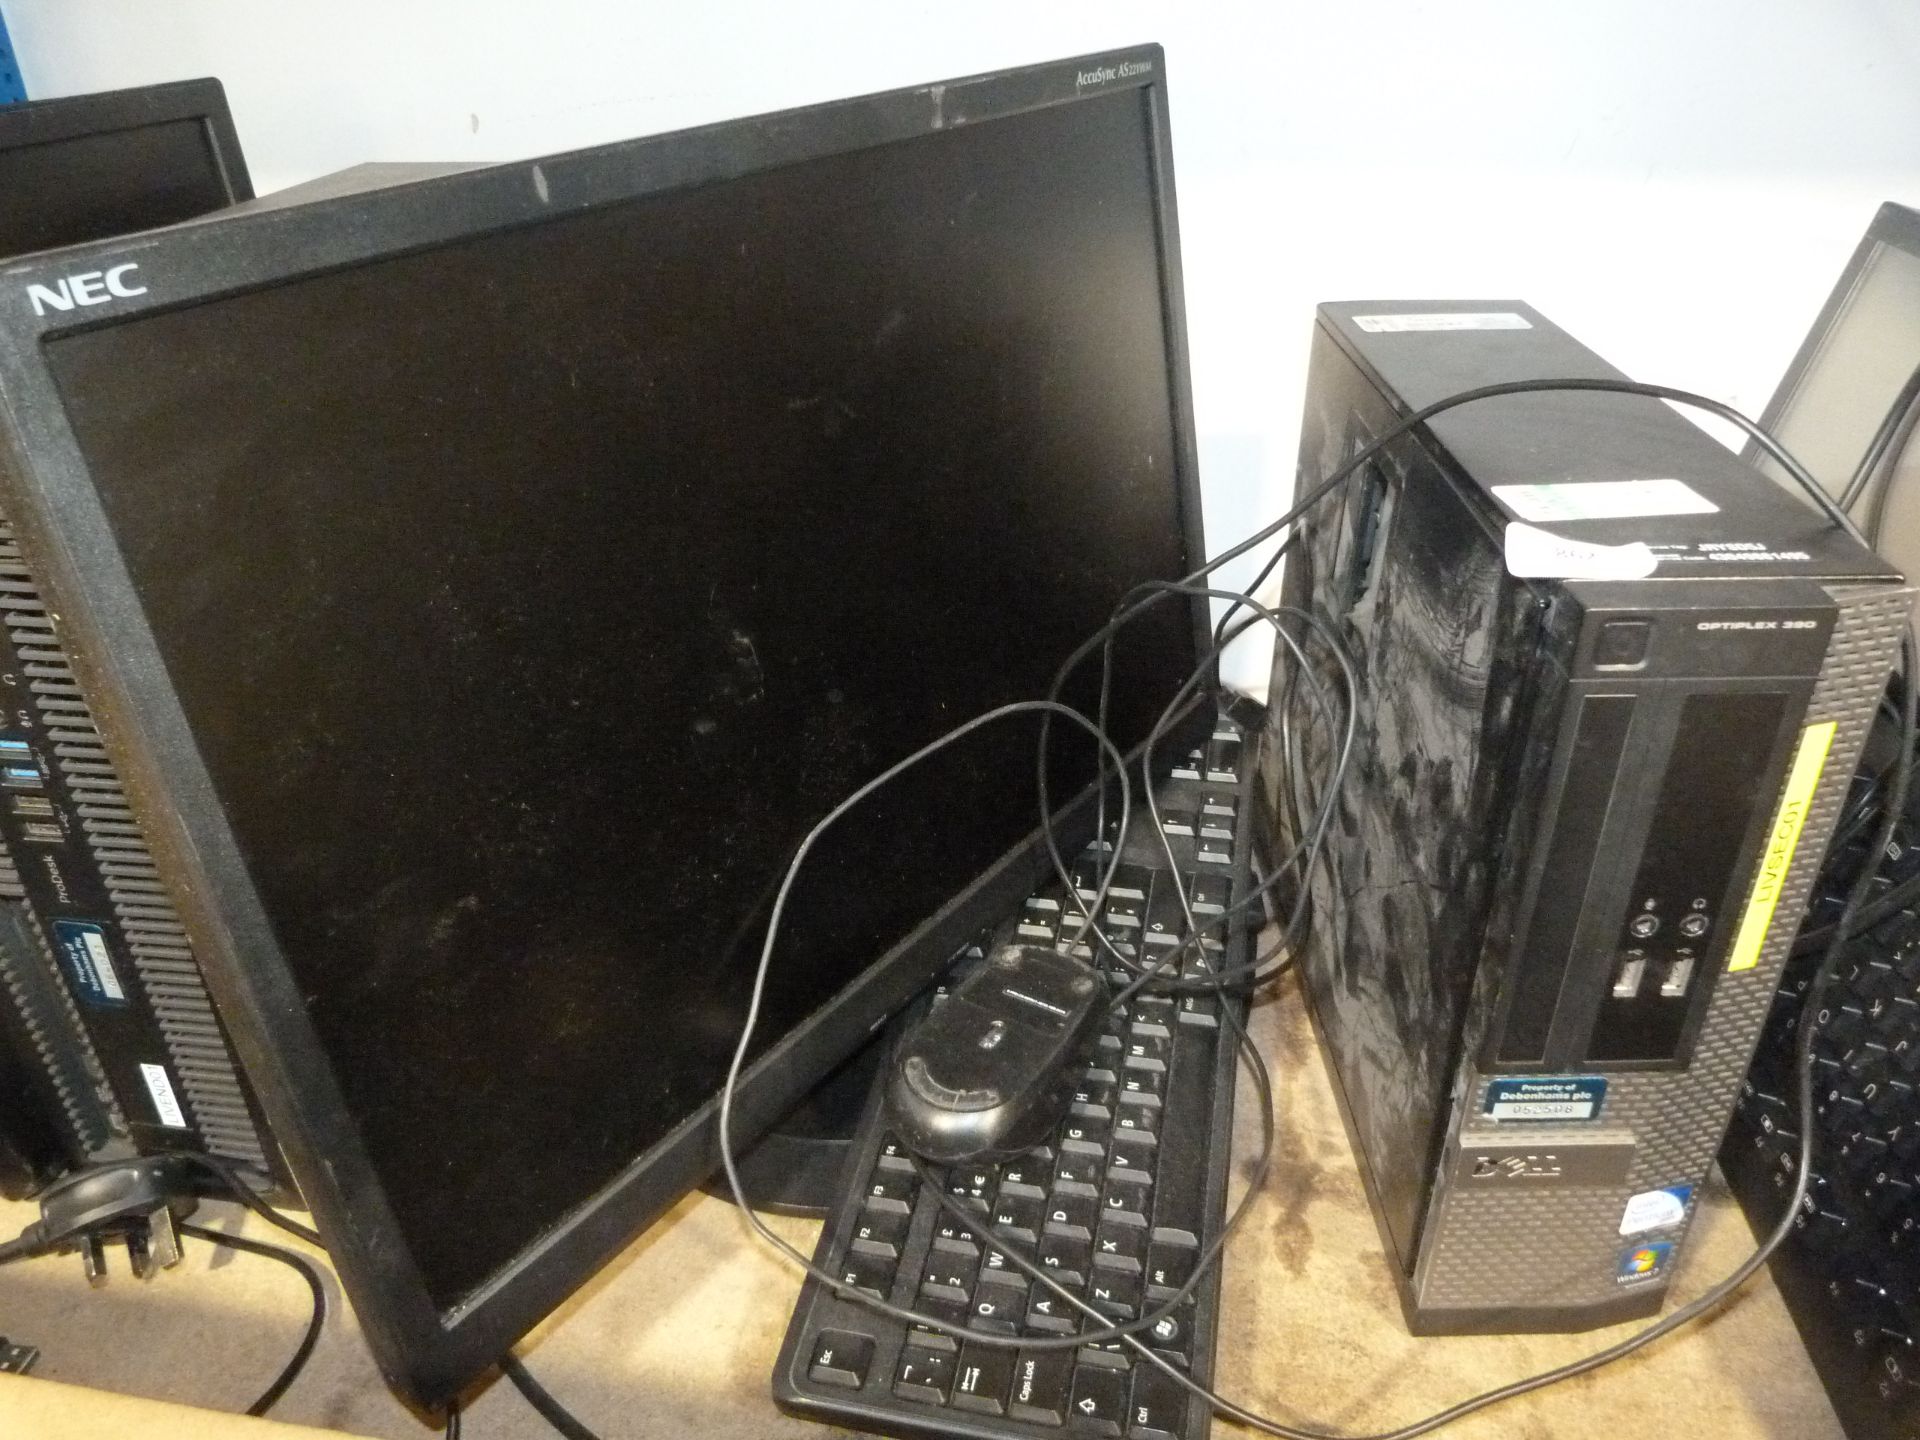 *Dell Computer with NEC Monitor